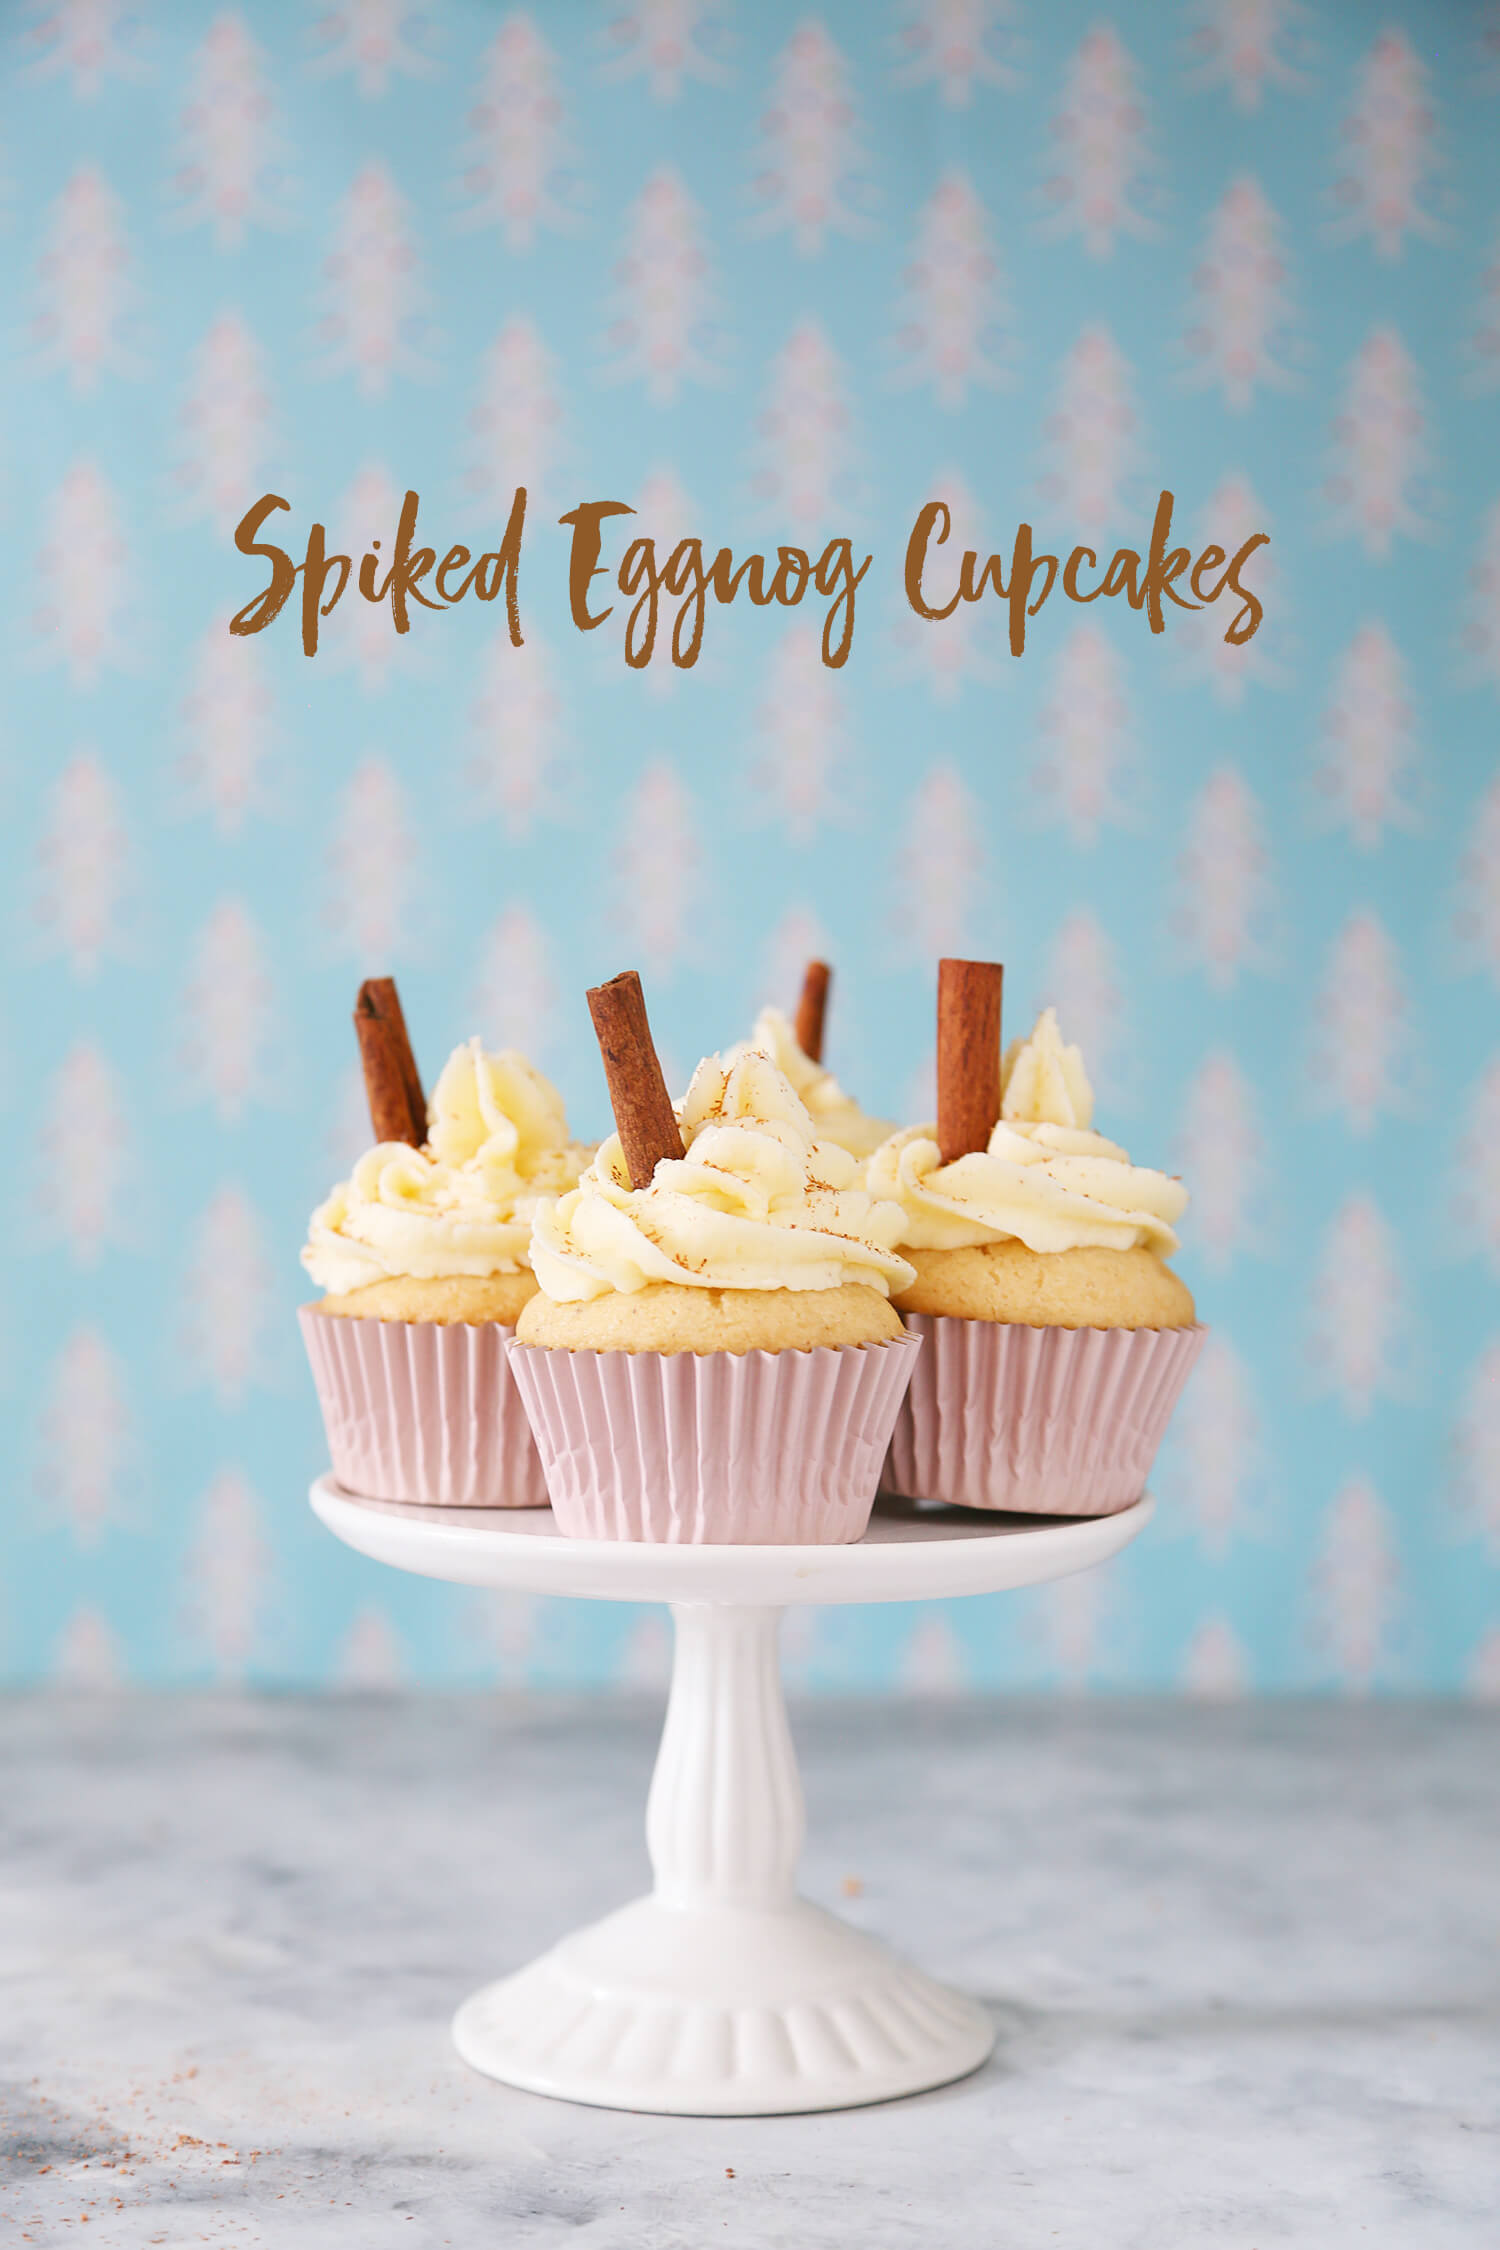 Spiked Eggnog Cupcakes